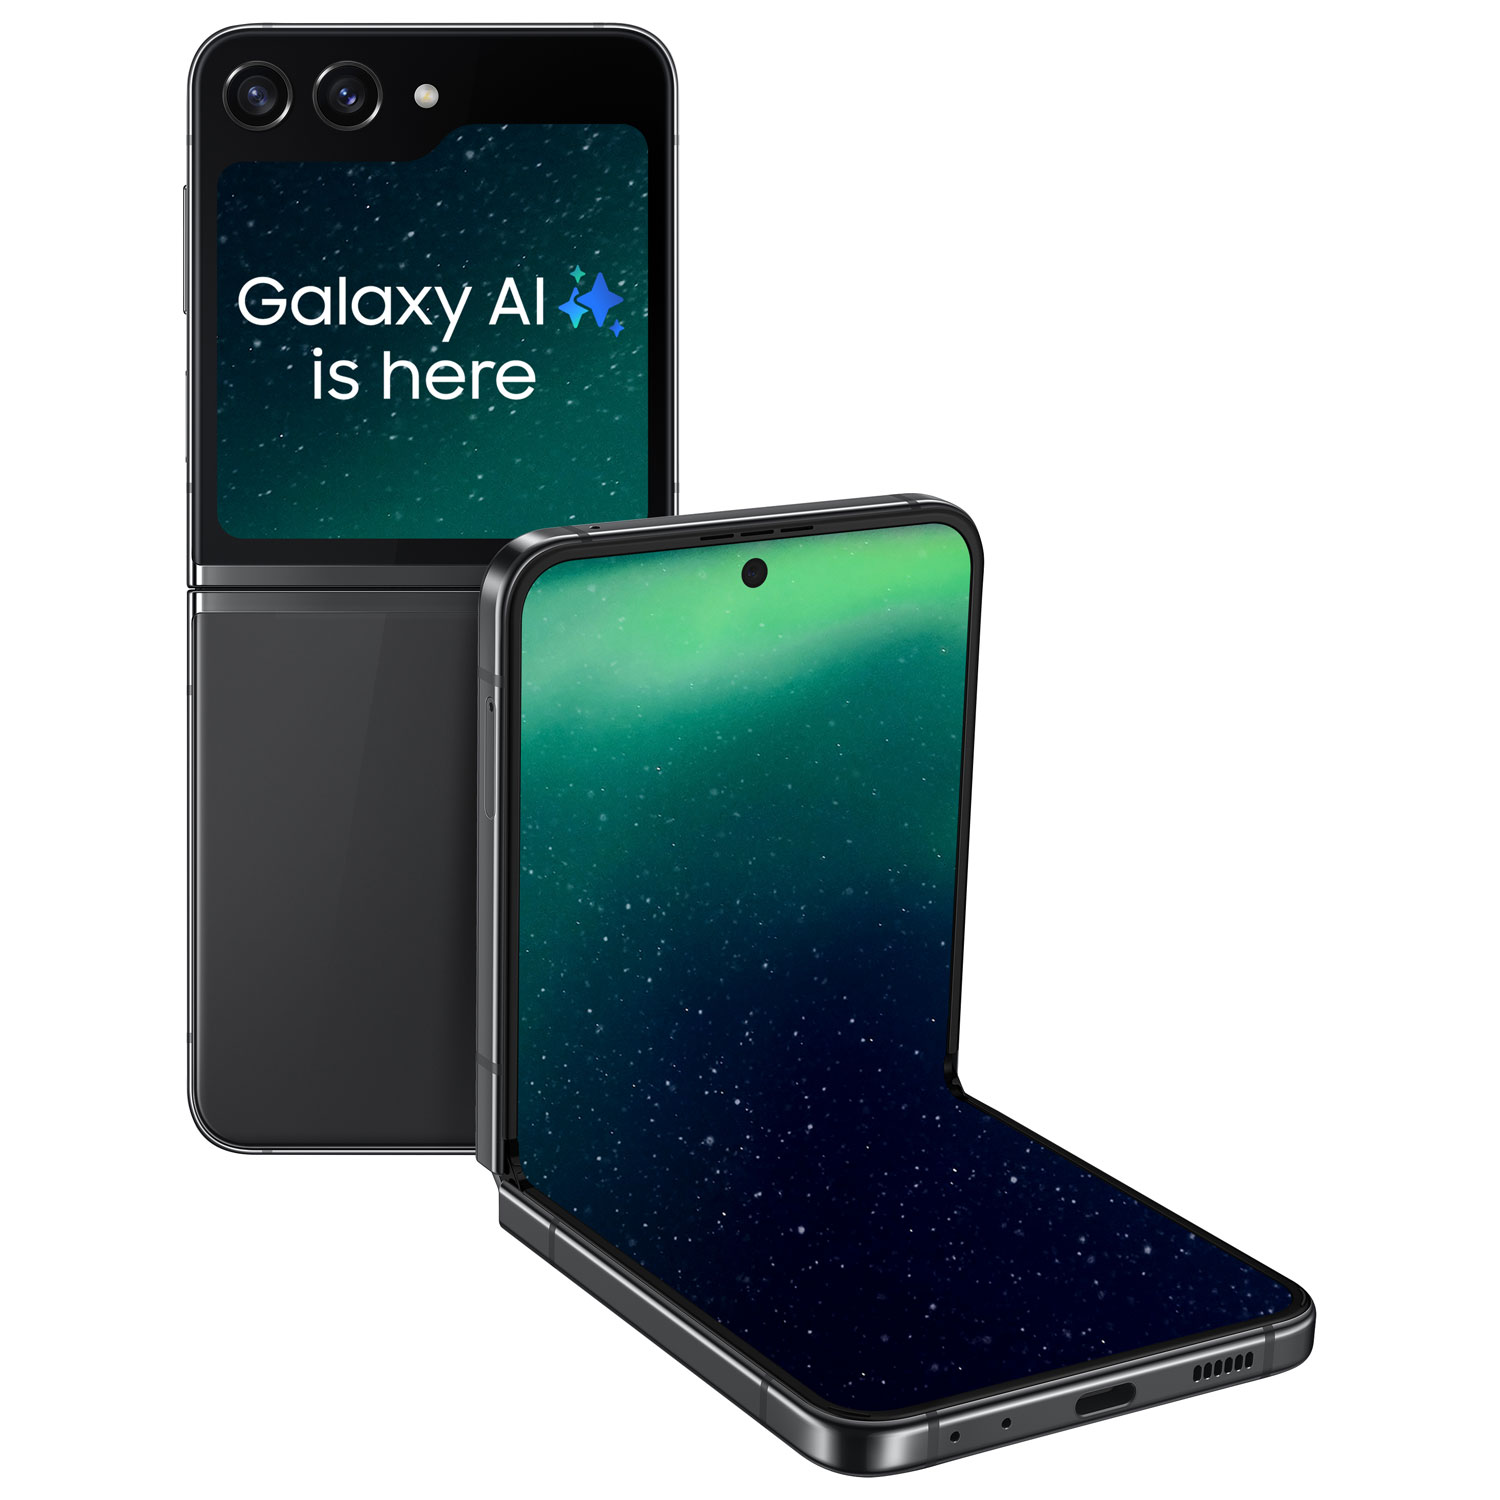 Samsung Galaxy Z Flip5 256GB - Graphite - Unlocked